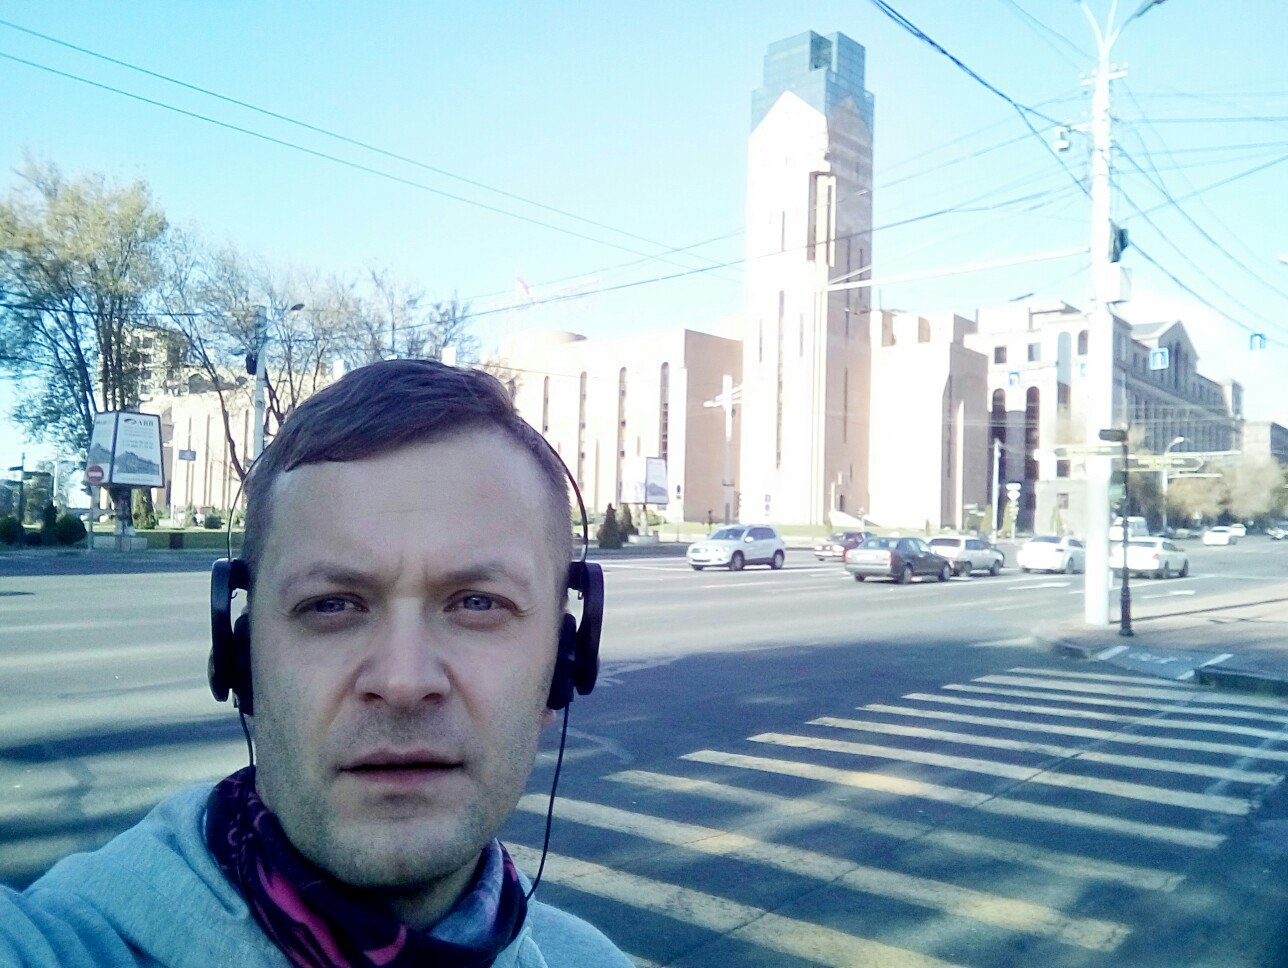 Дмитрий часто выходит на пробежку по городу